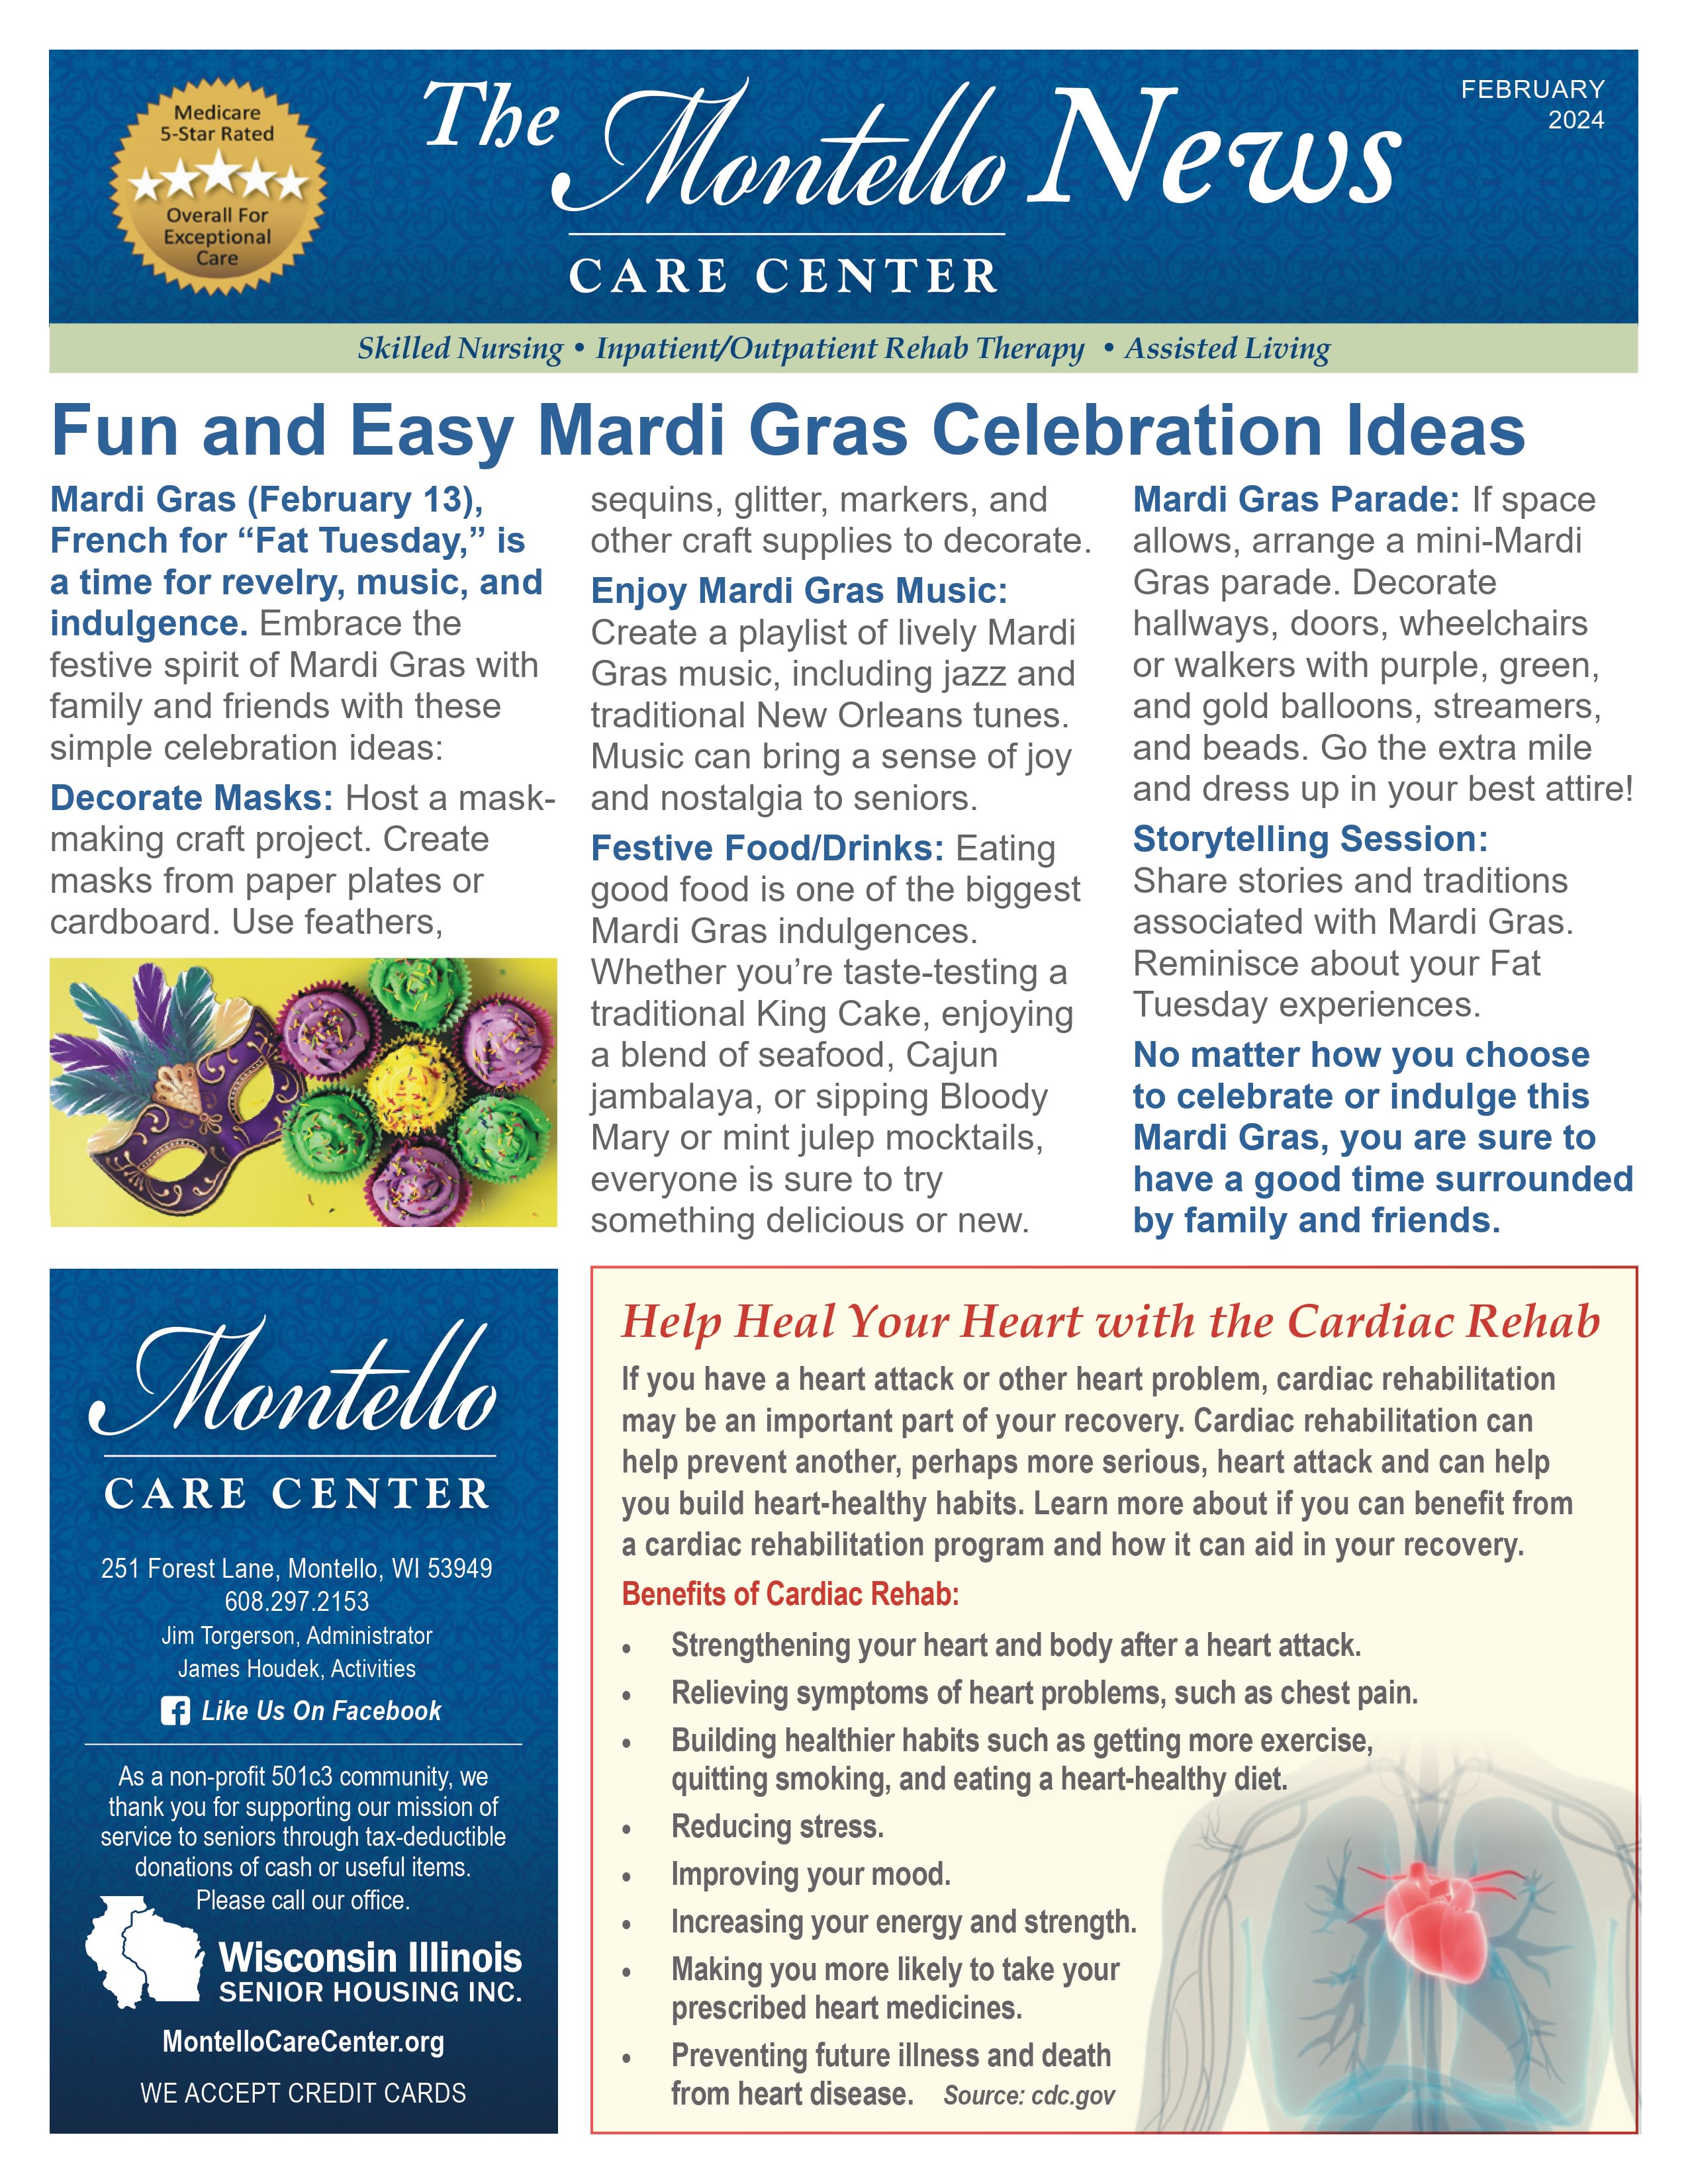 February 2024 Newsletter at Montello Care Center in Montello, Wisconsin